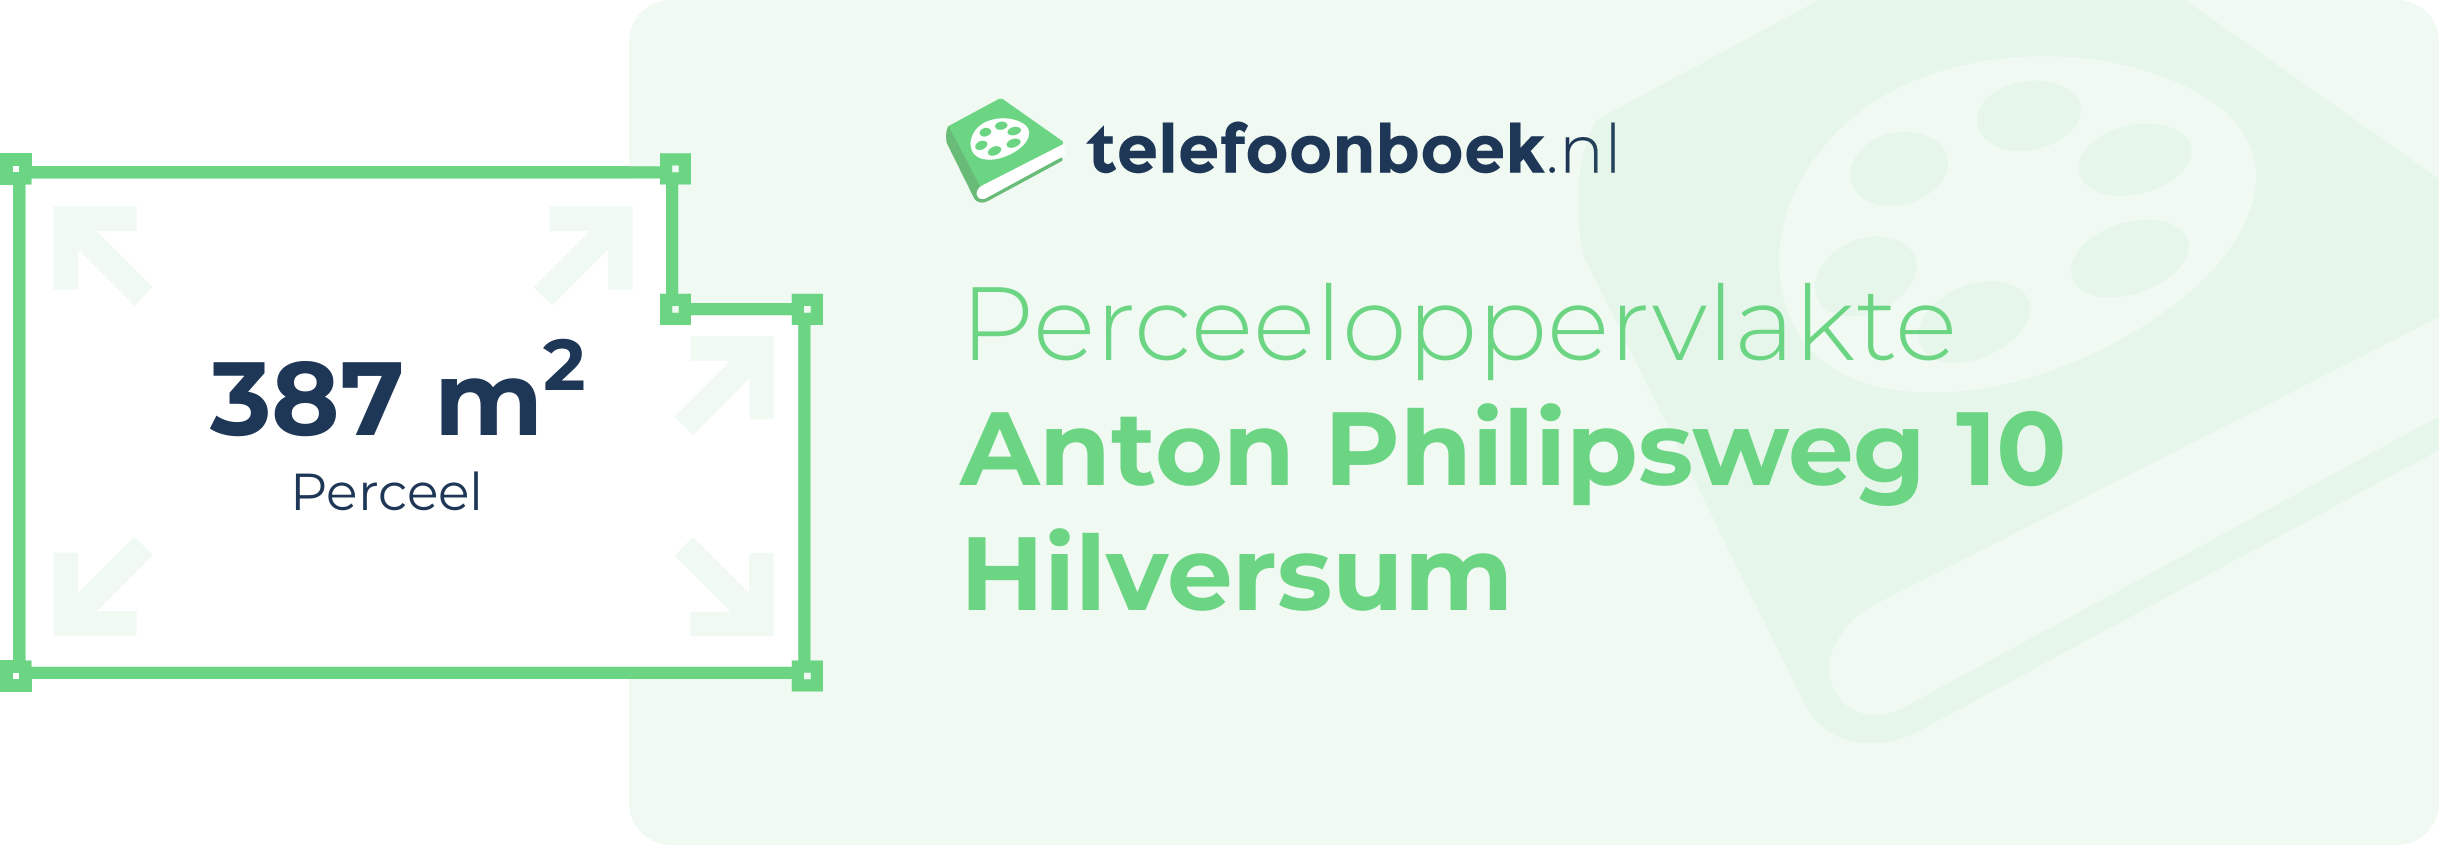 Perceeloppervlakte Anton Philipsweg 10 Hilversum